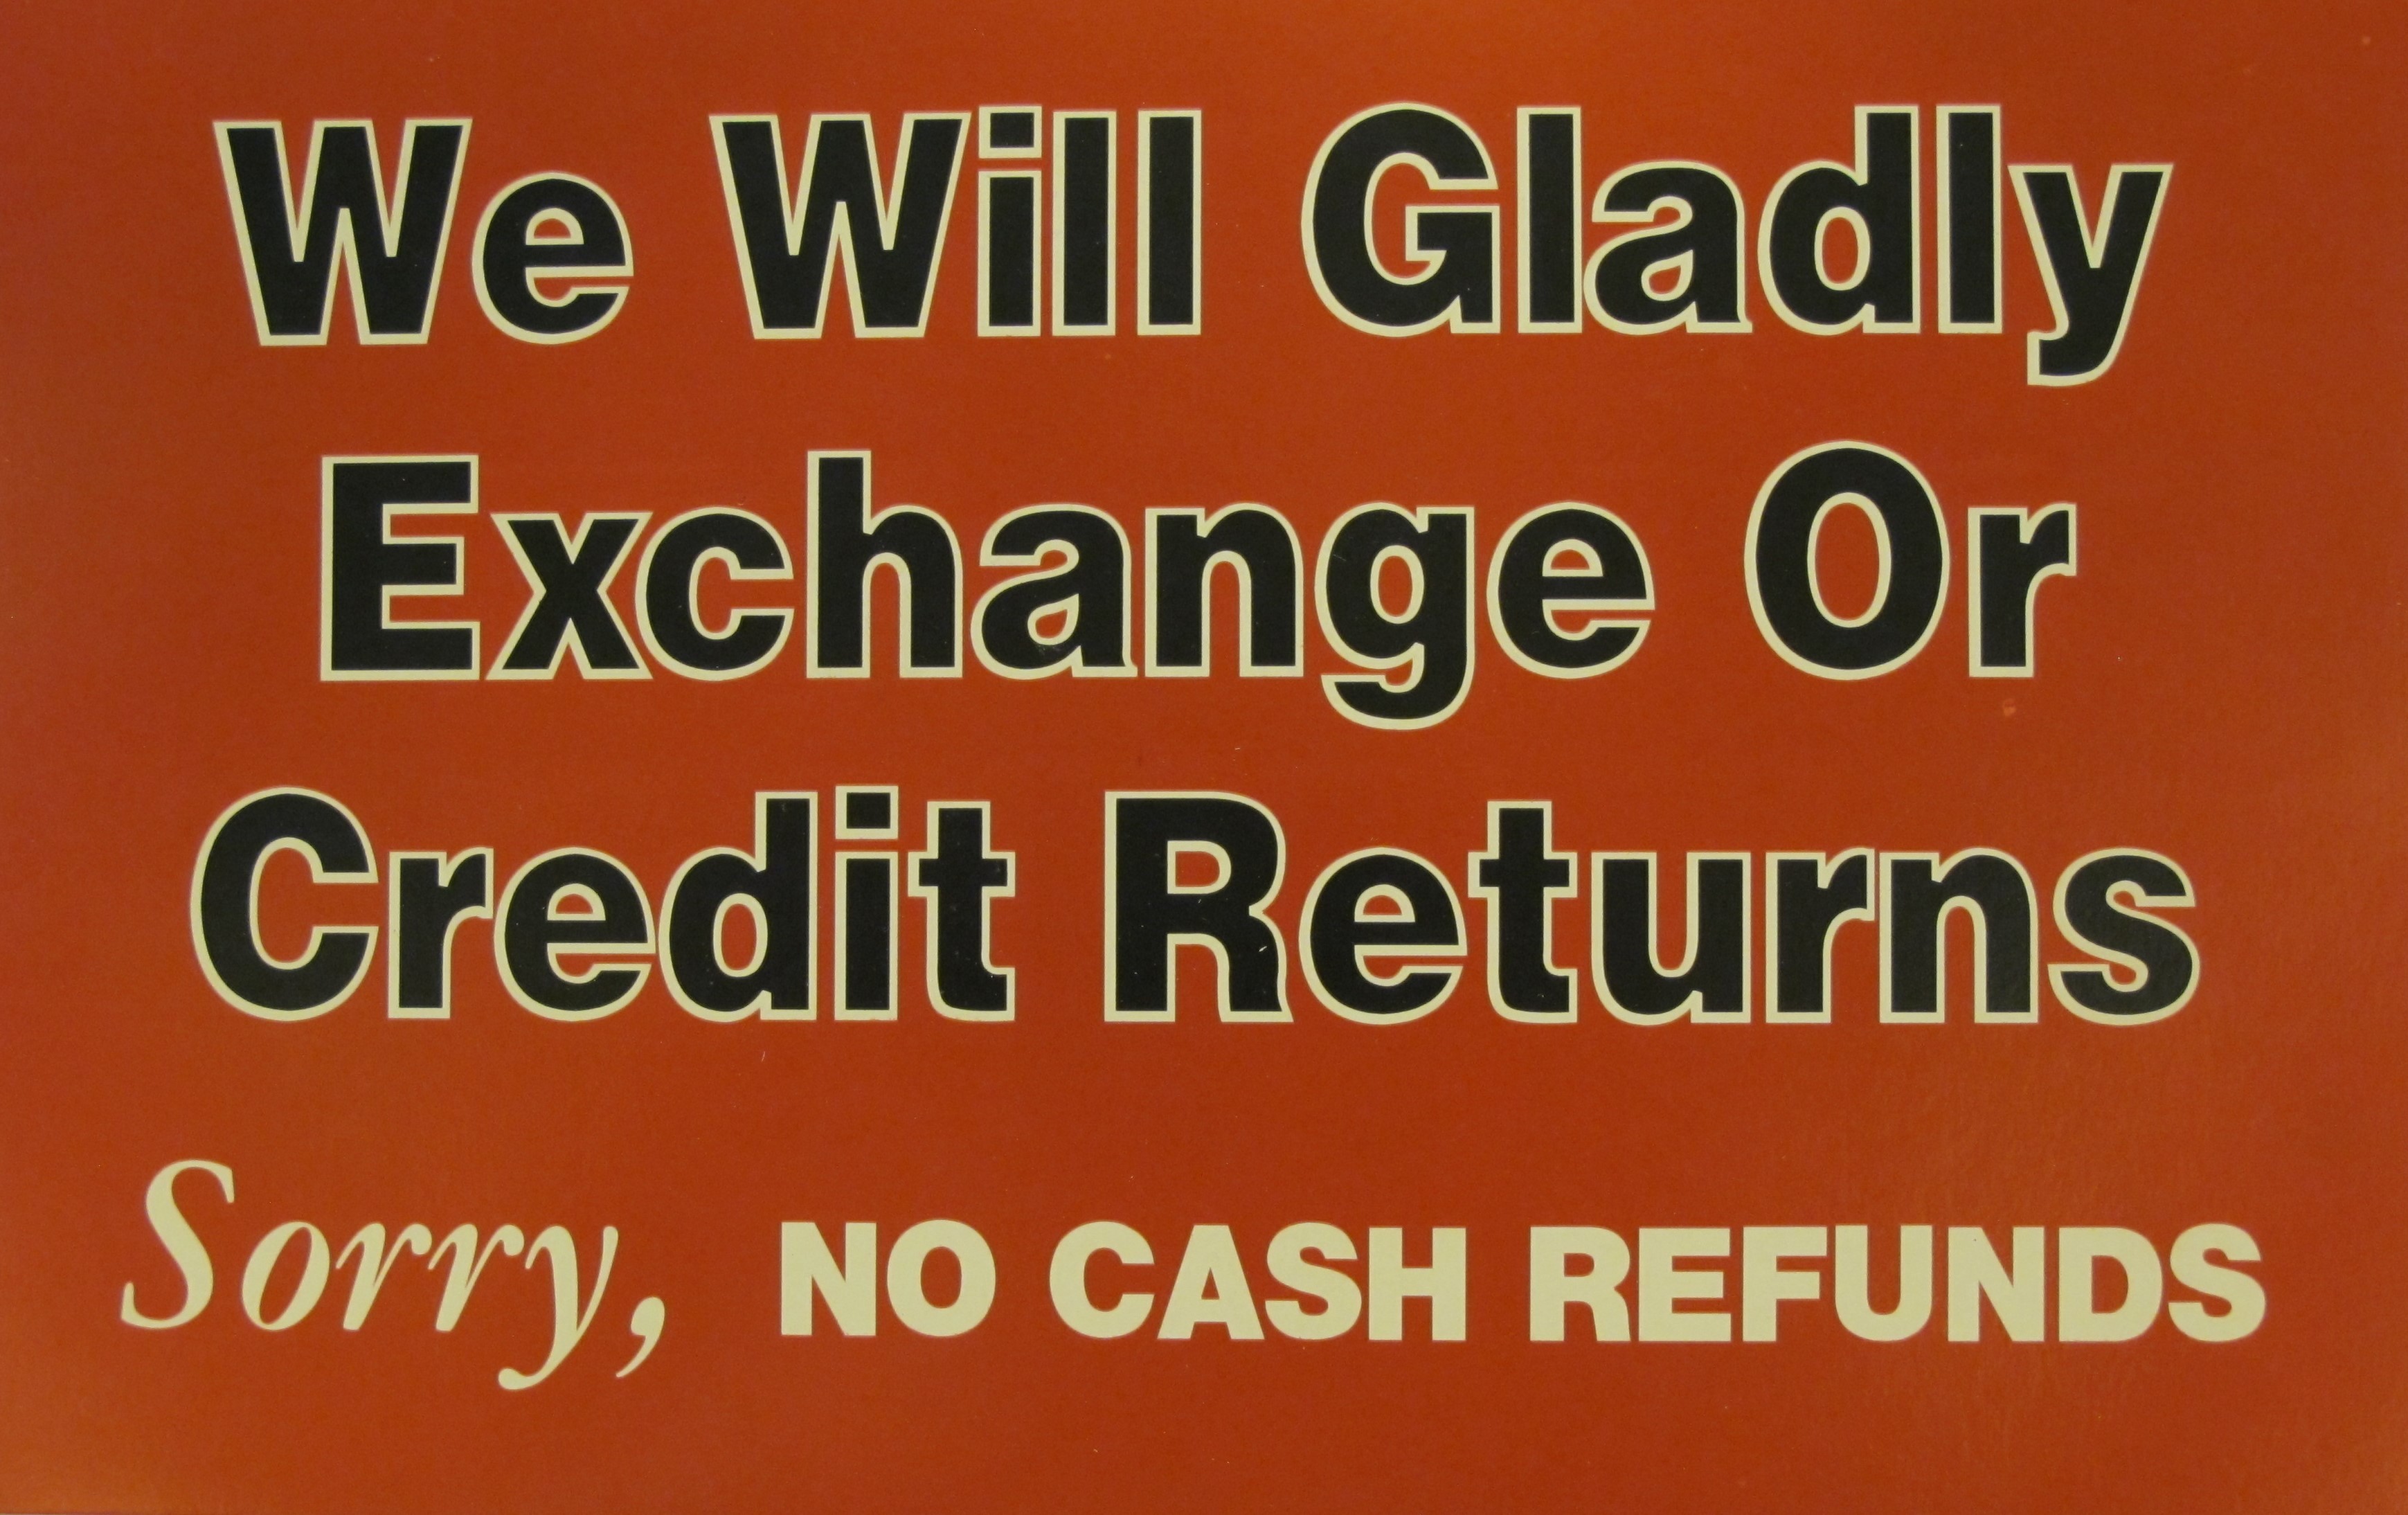 We Would Gladly Exchange or Credit Returns Sign